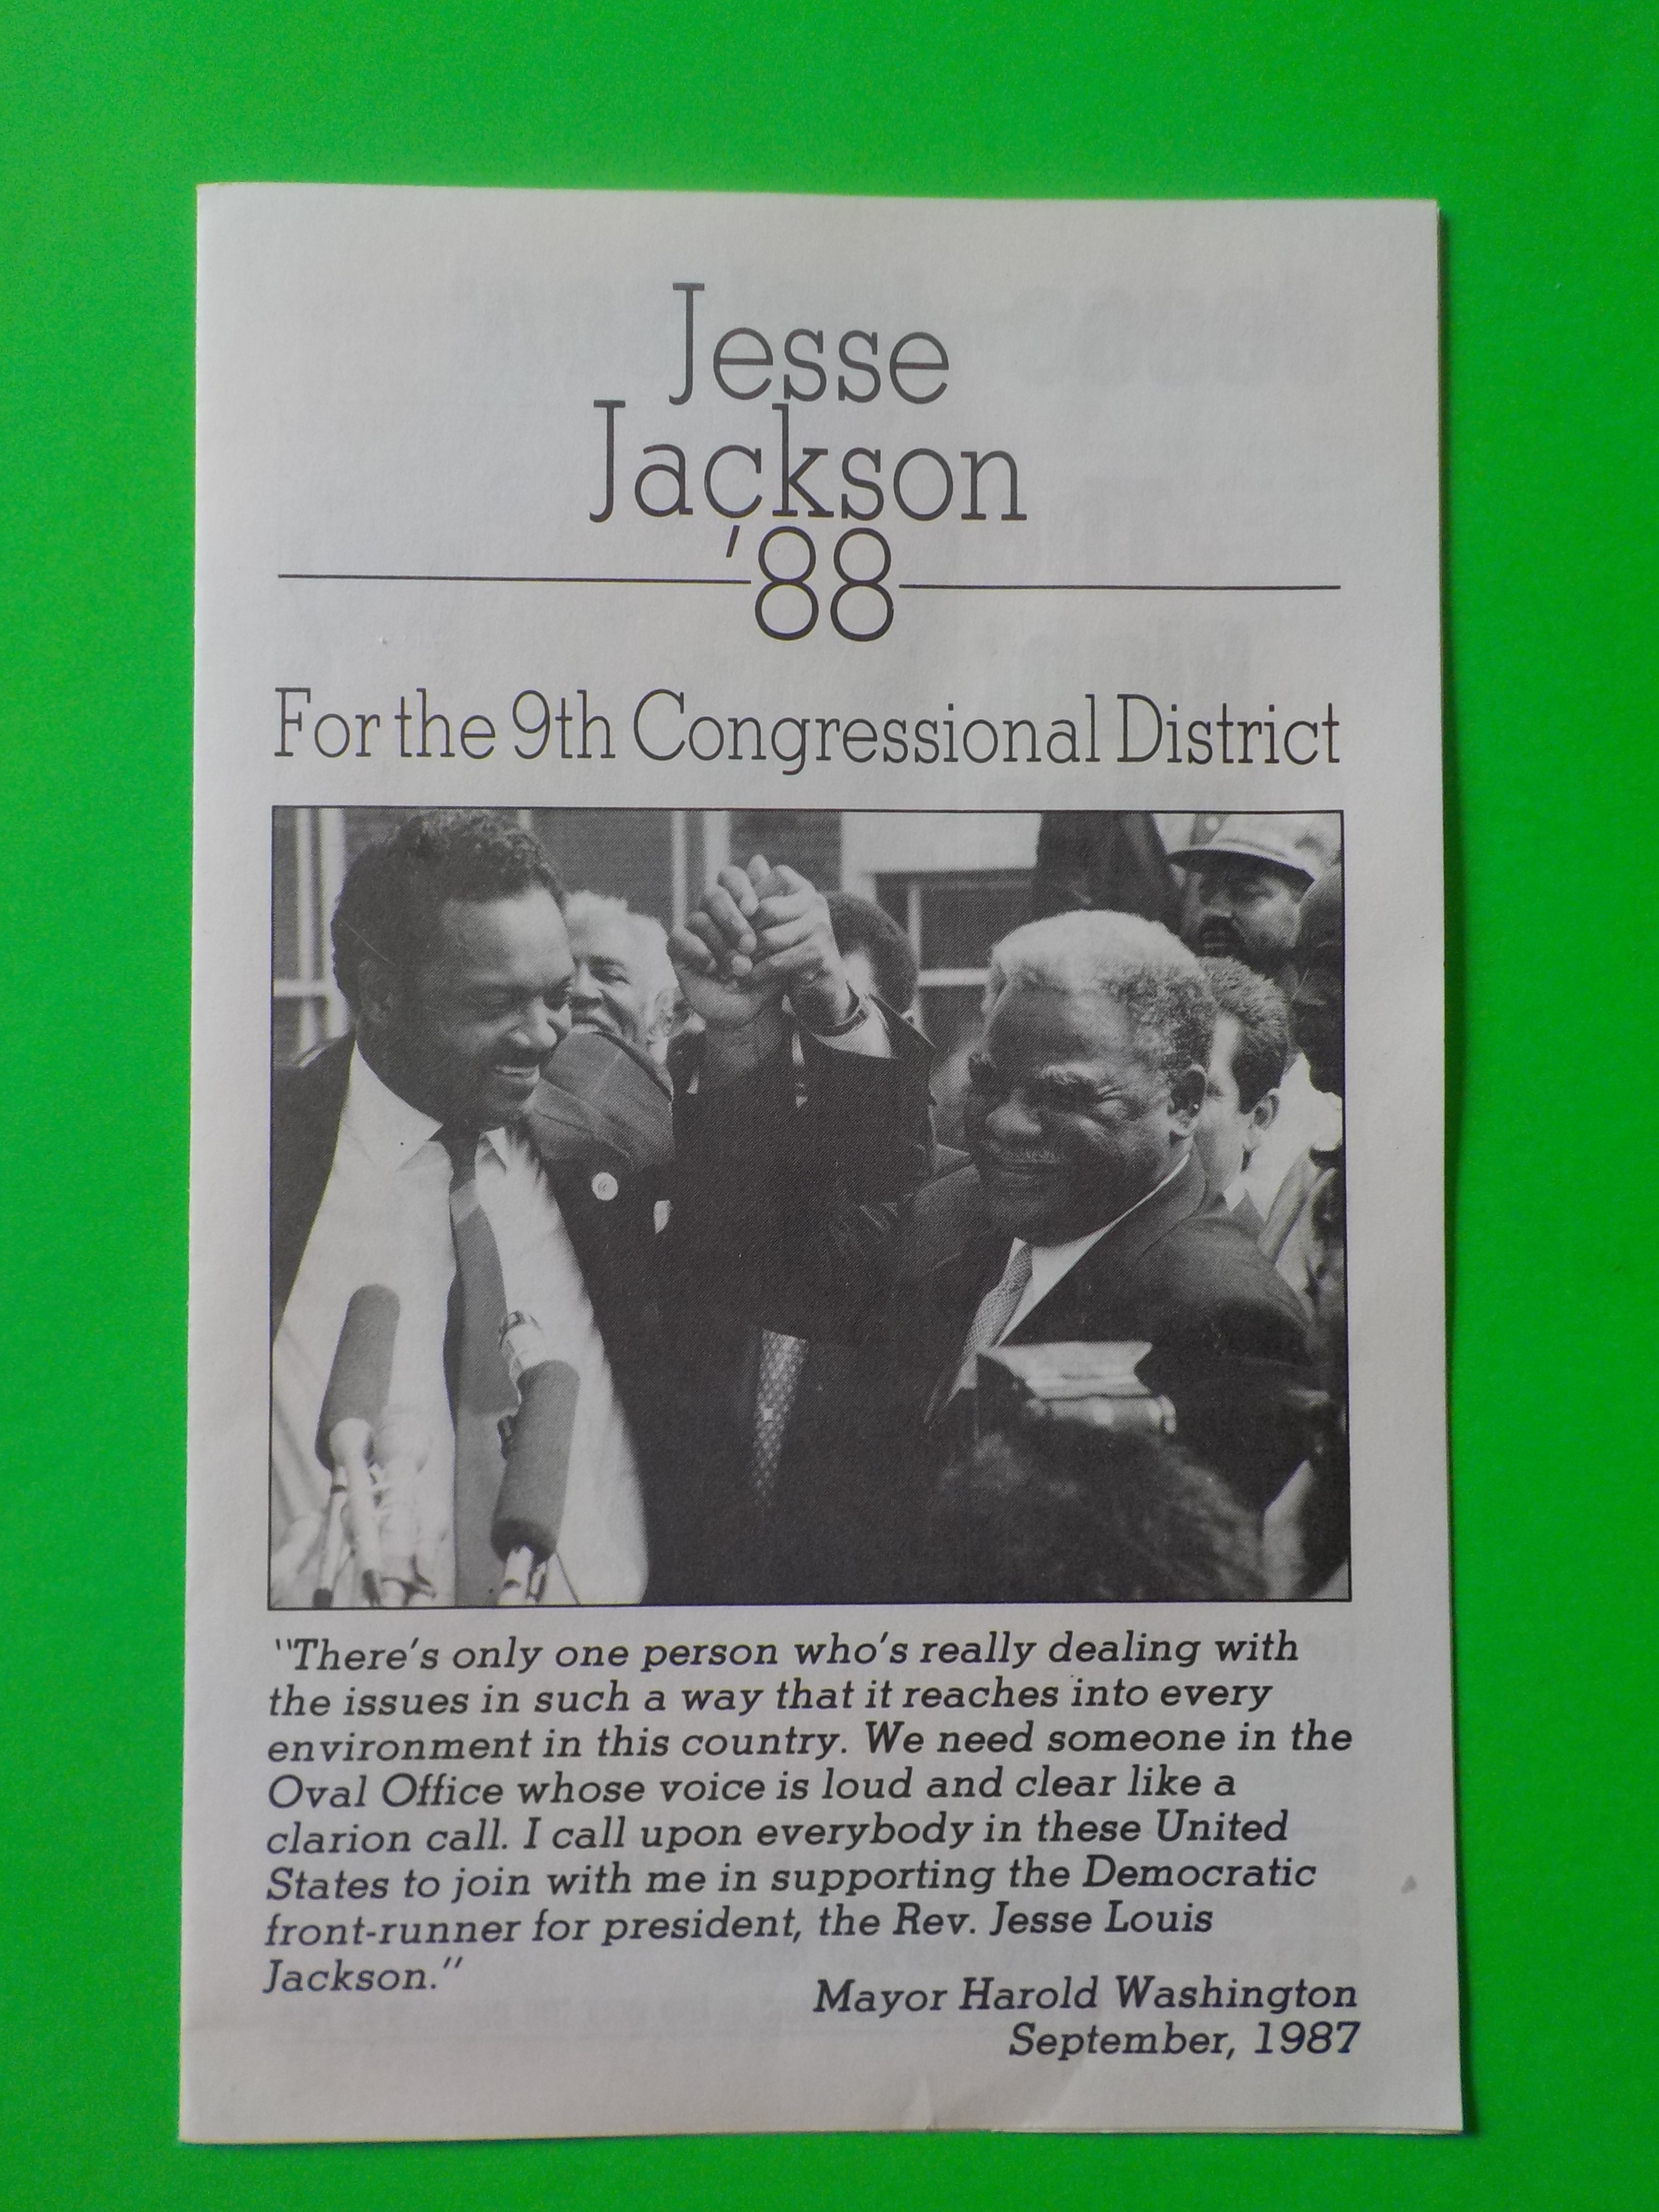 Jesse '88 flyer